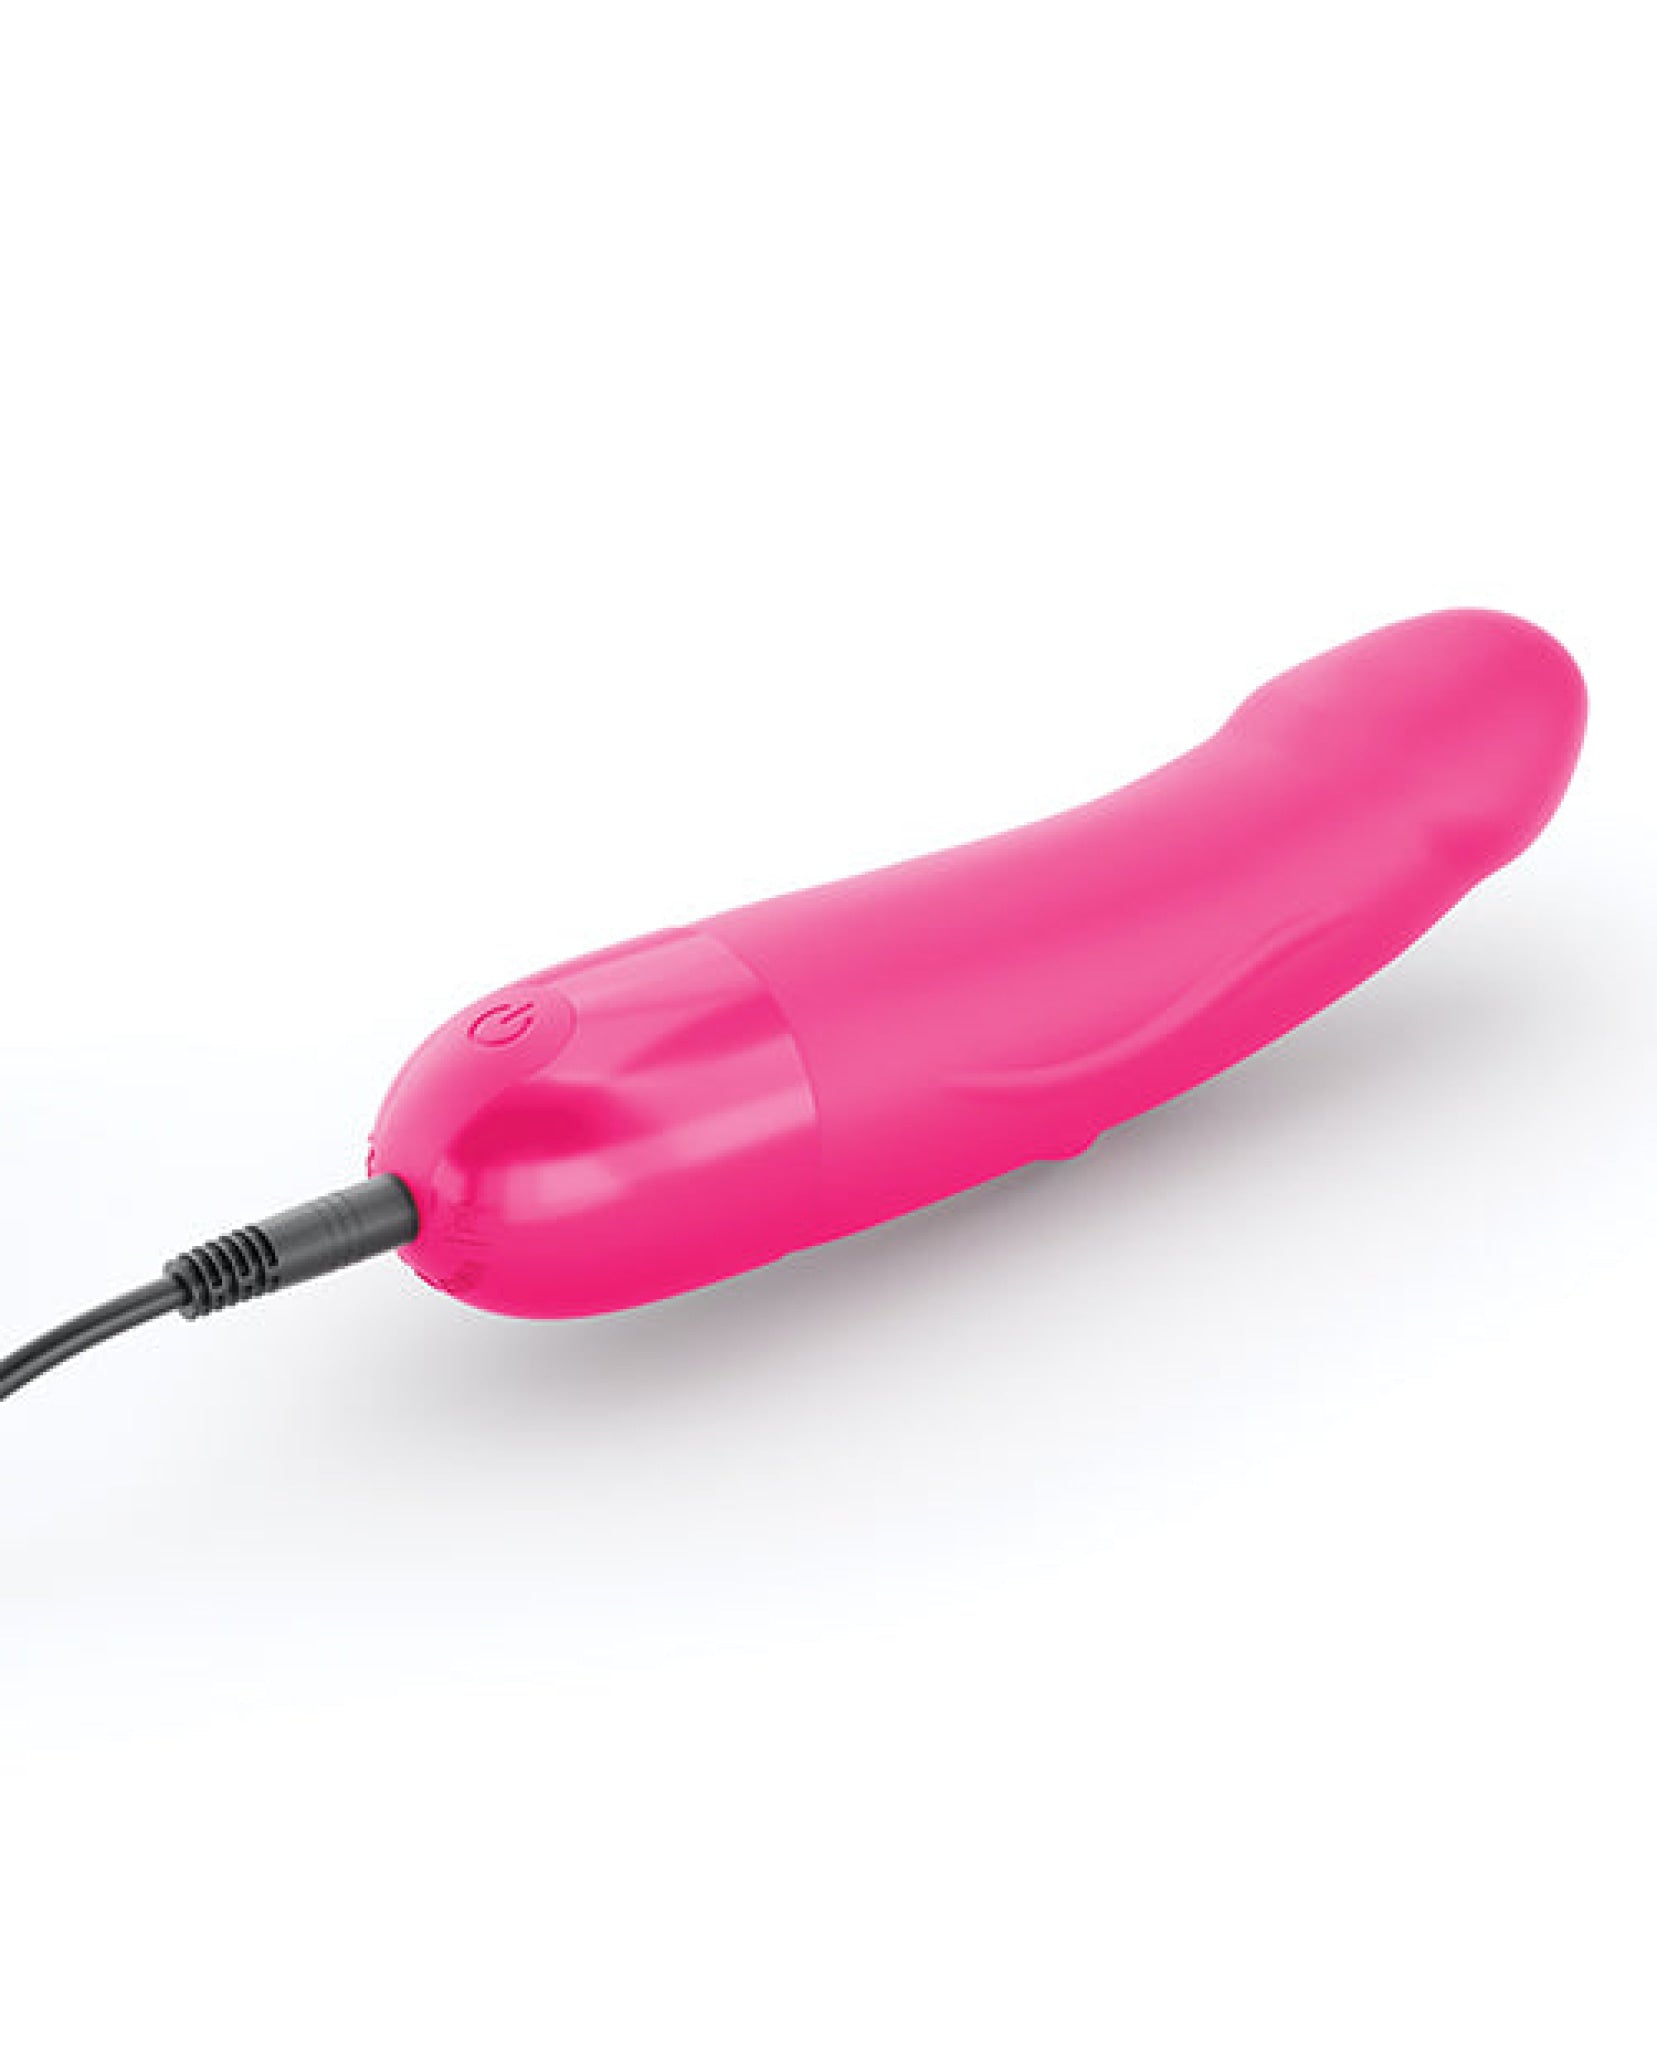 Dorcel Real Vibration S 6" Rechargeable Vibrator - Pink Dorcel